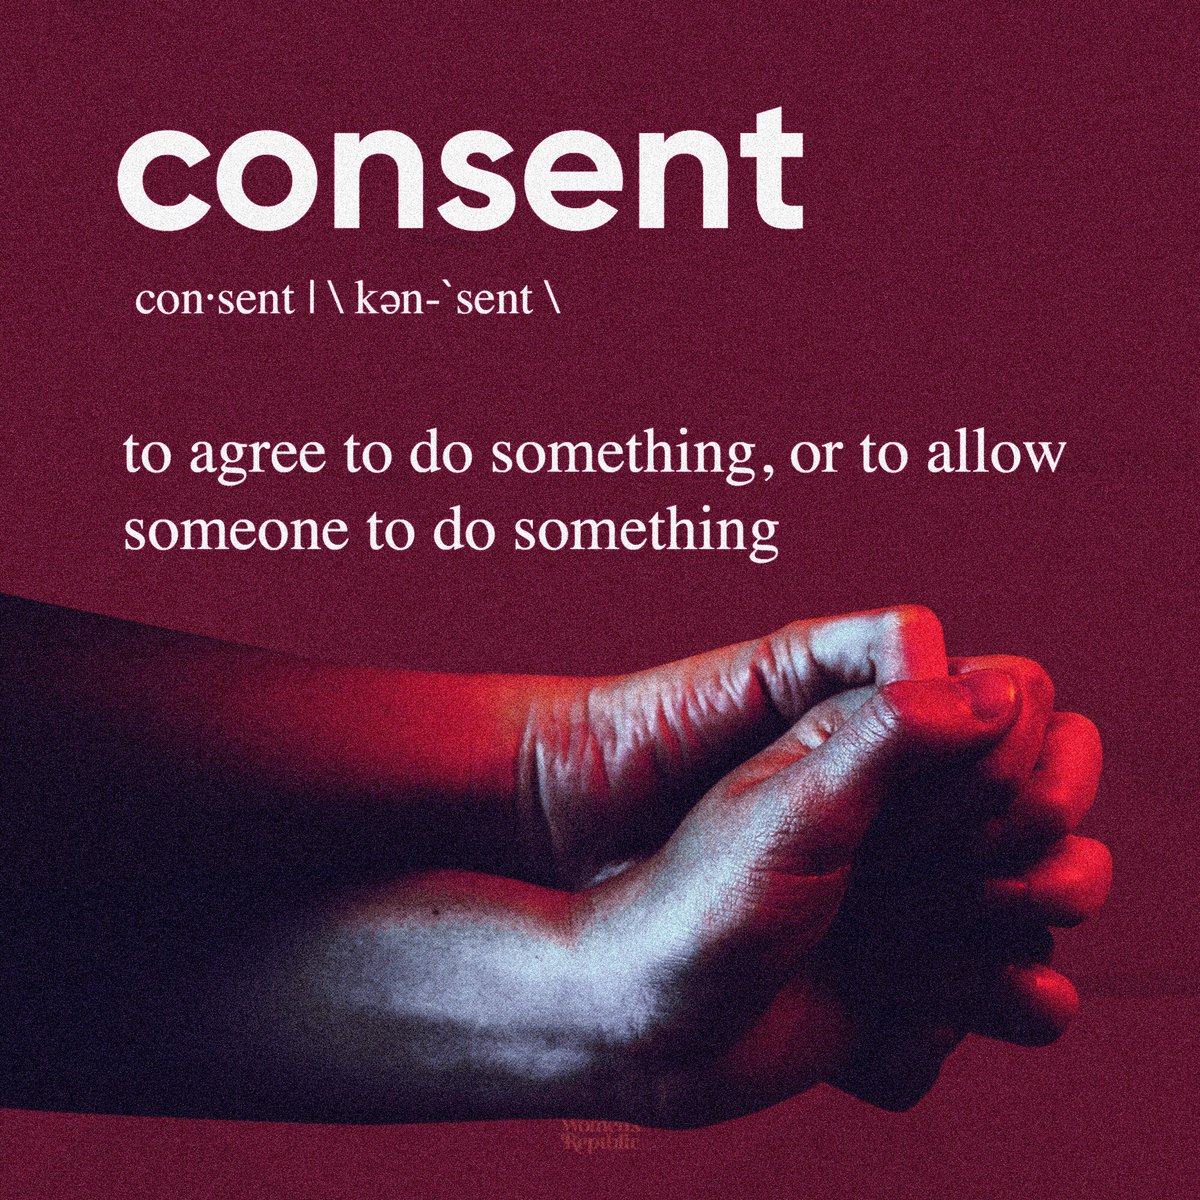 on consent